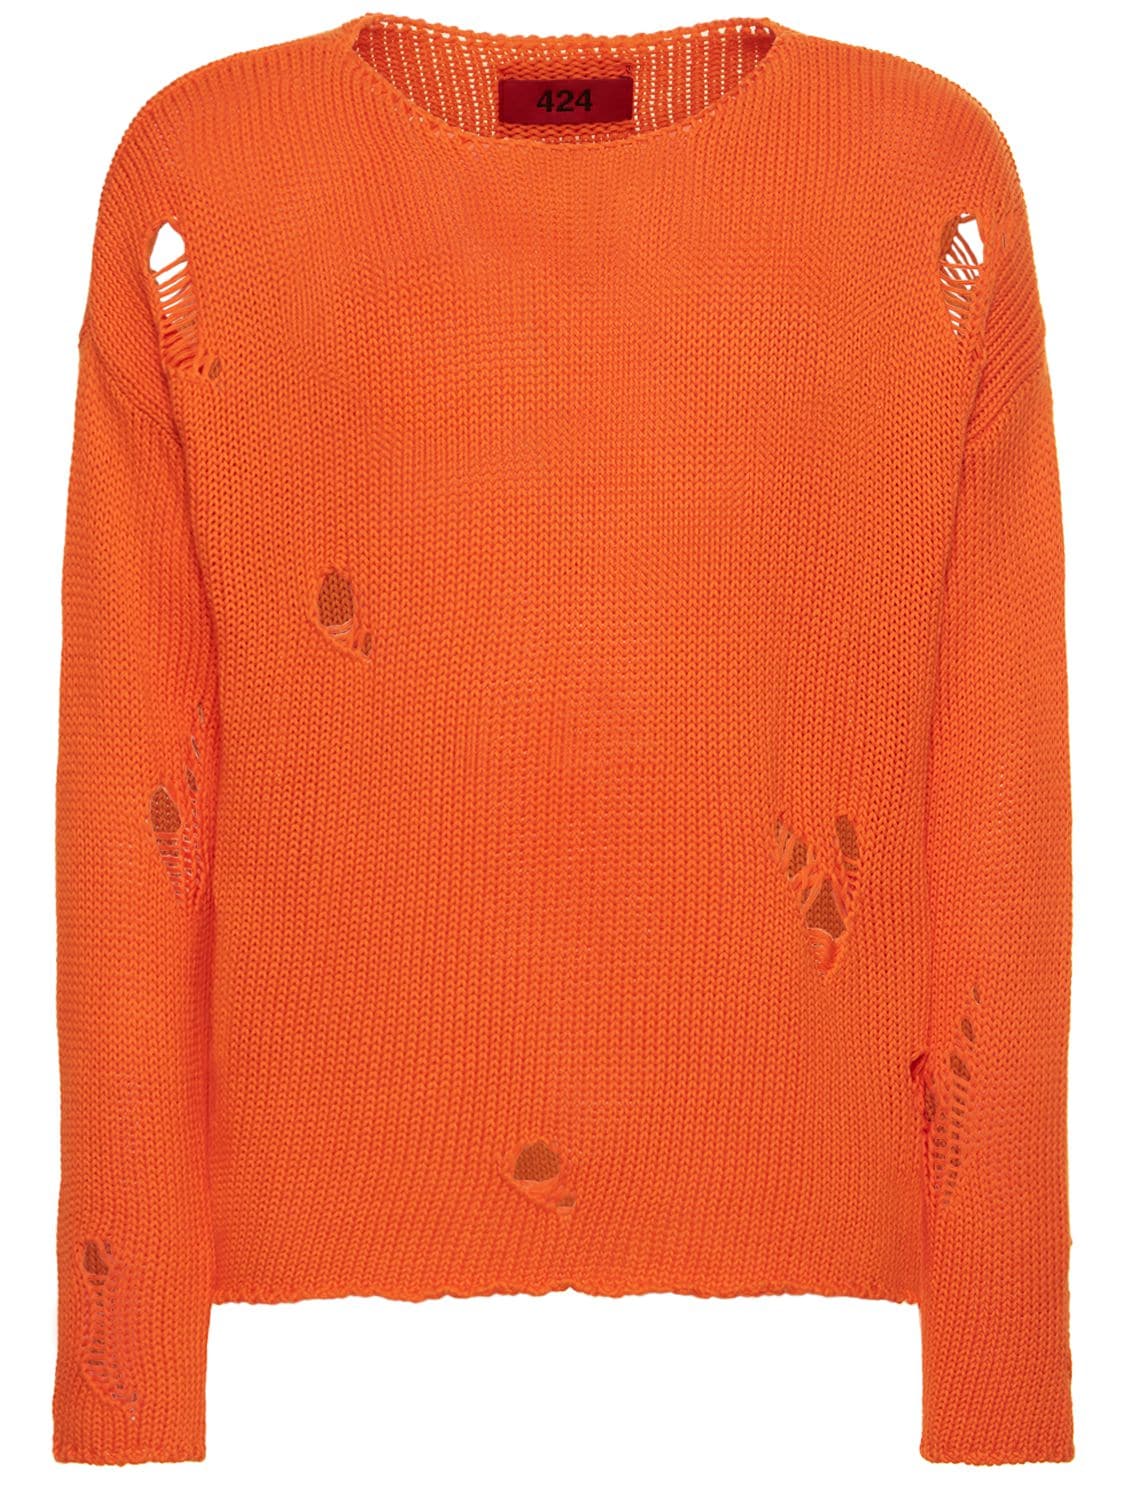 Sweater Aus Baumwollstrick - 424 - Modalova